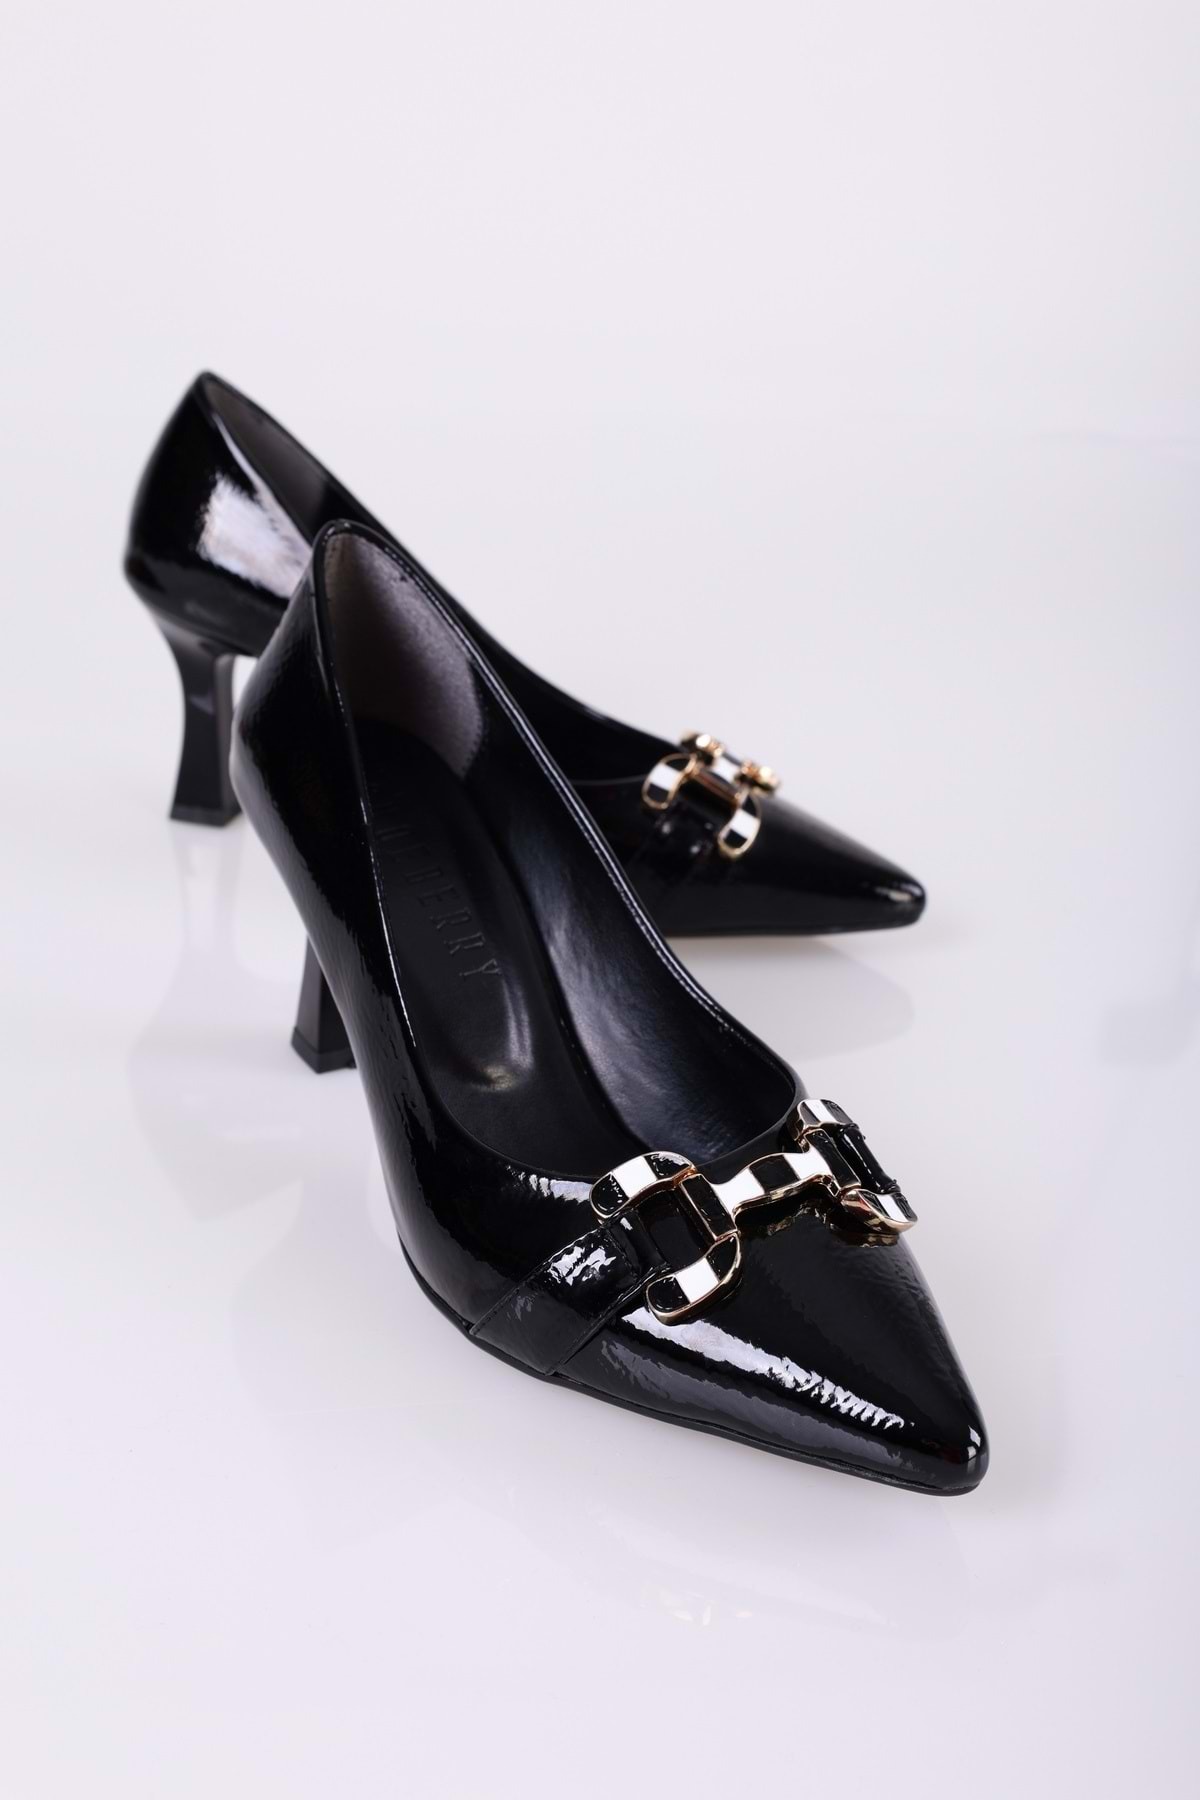 Levně Shoeberry Women's Sadie Black Patent Leather Heeled Shoes Stiletto